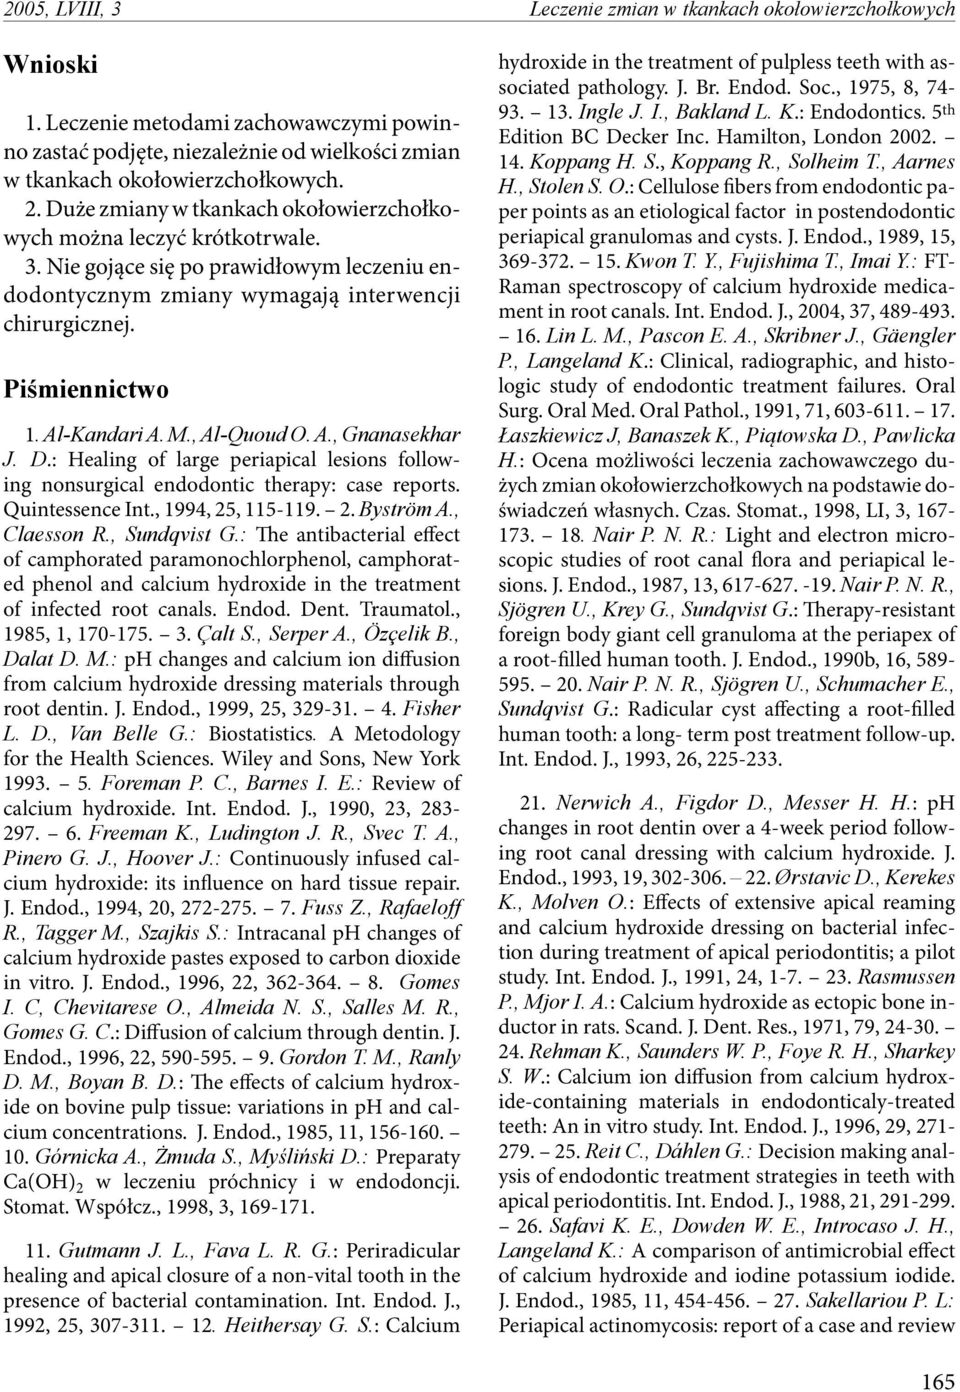 Al-Kandari A. M., Al-Quoud O. A., Gnanasekhar J. D.: Healing of large periapical lesions following nonsurgical endodontic therapy: case reports. Quintessence Int., 1994, 25, 115-119. 2. Byström A.